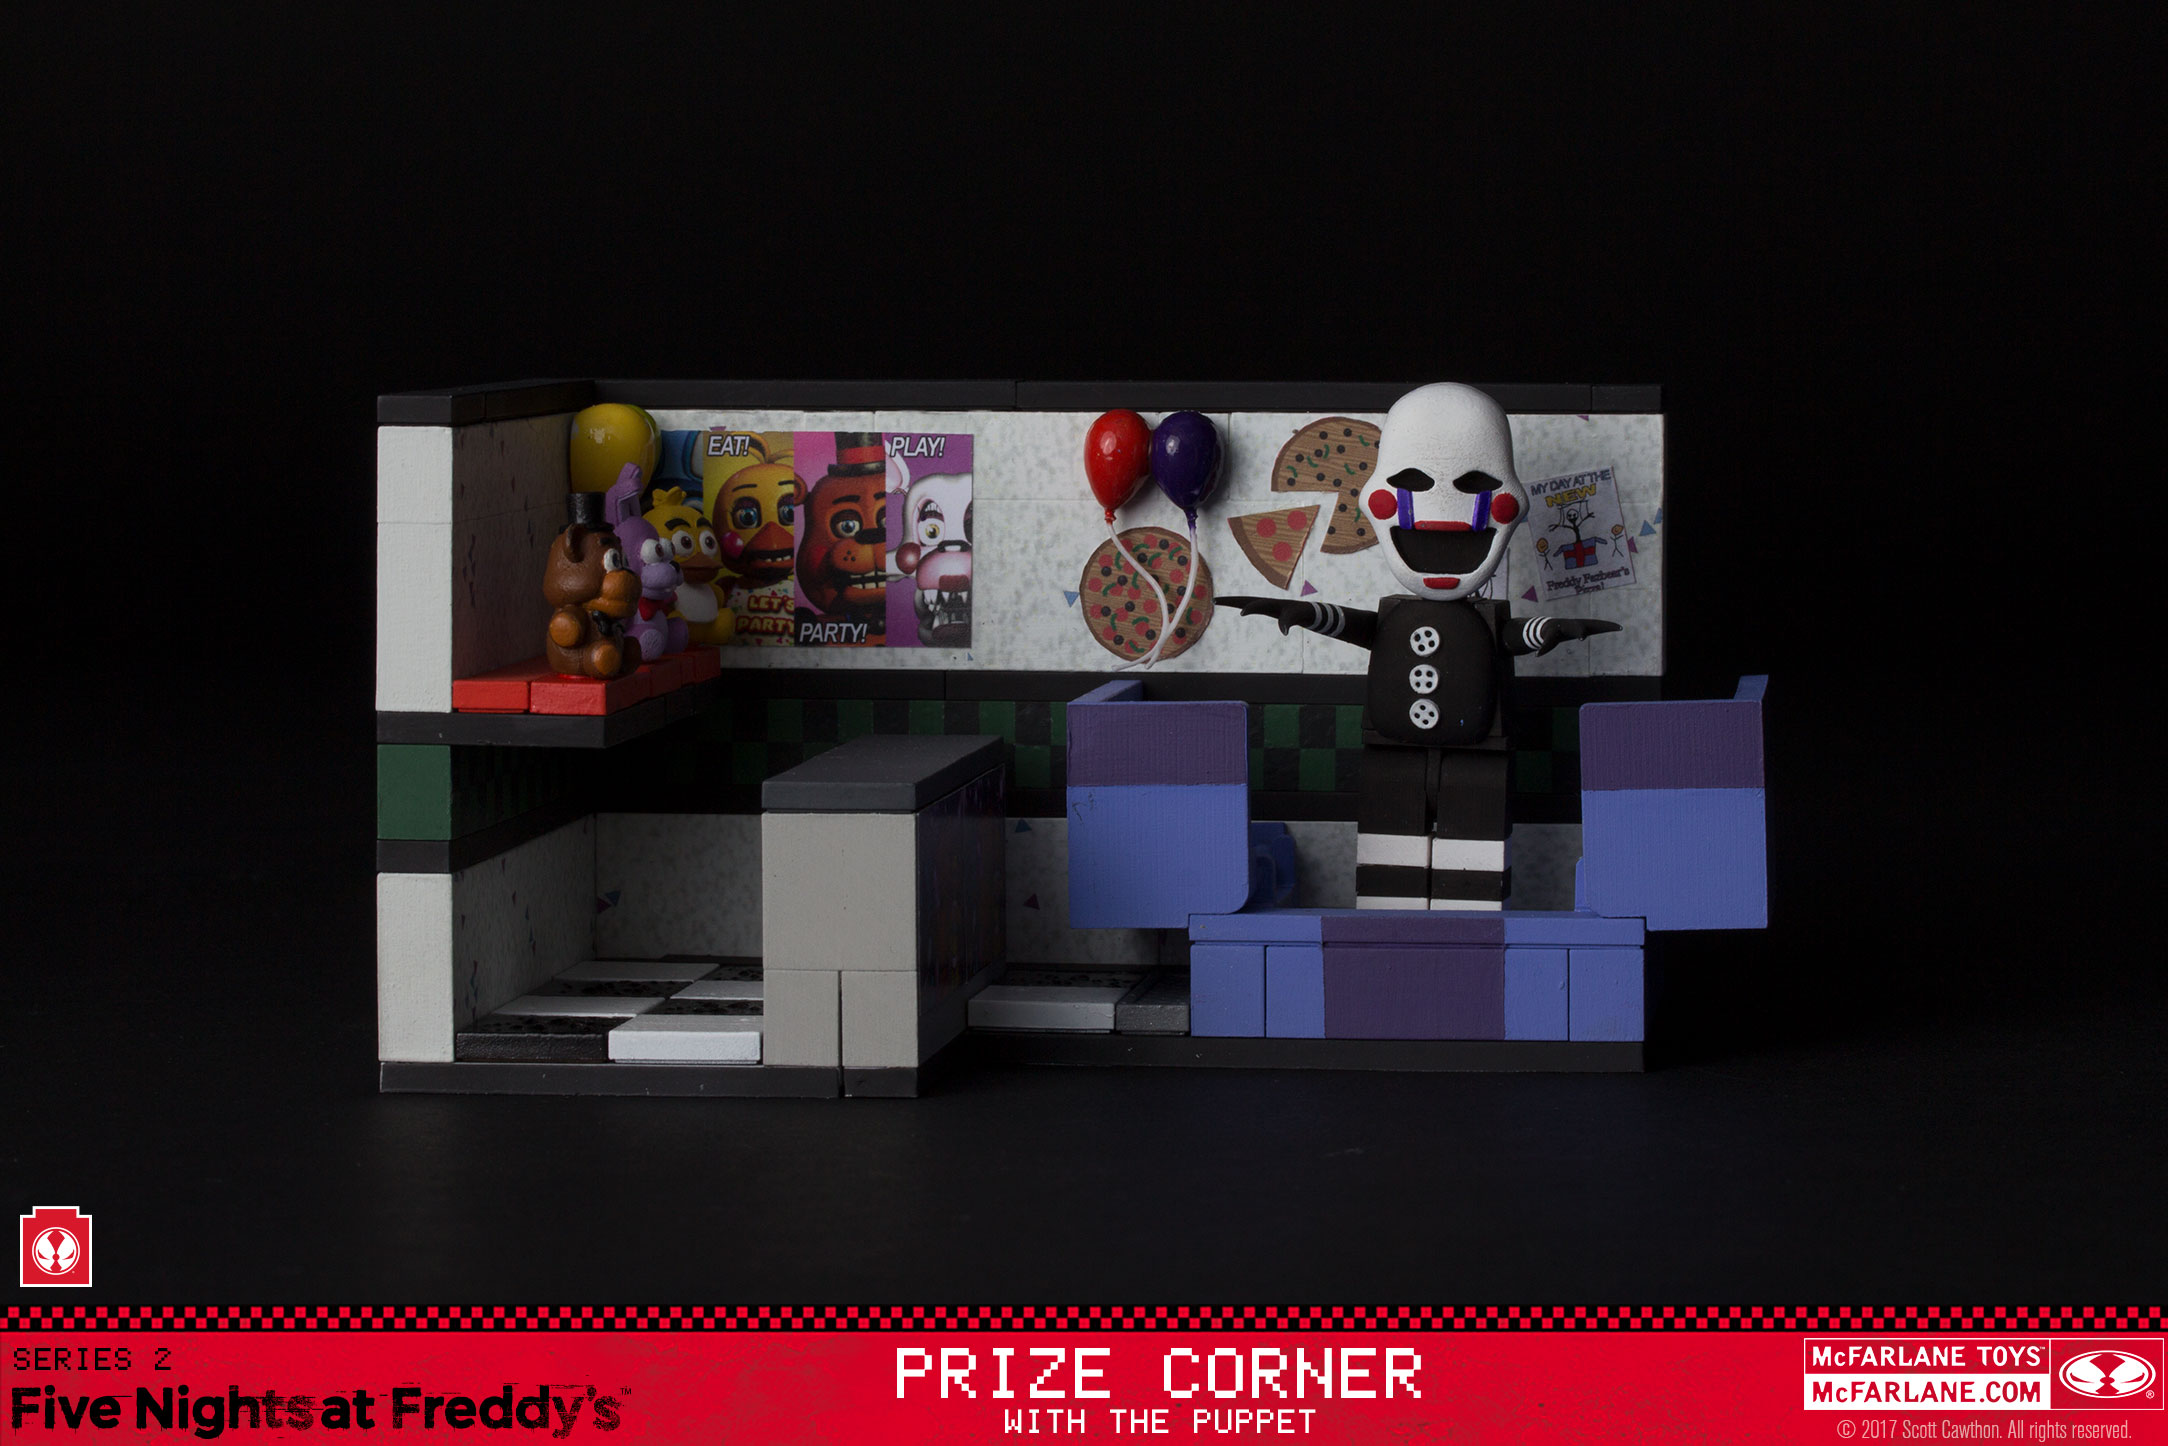 McFarlane Toys Five Nights at Freddy's FNAF Prize Corner 104pc Buildable Set for sale online 